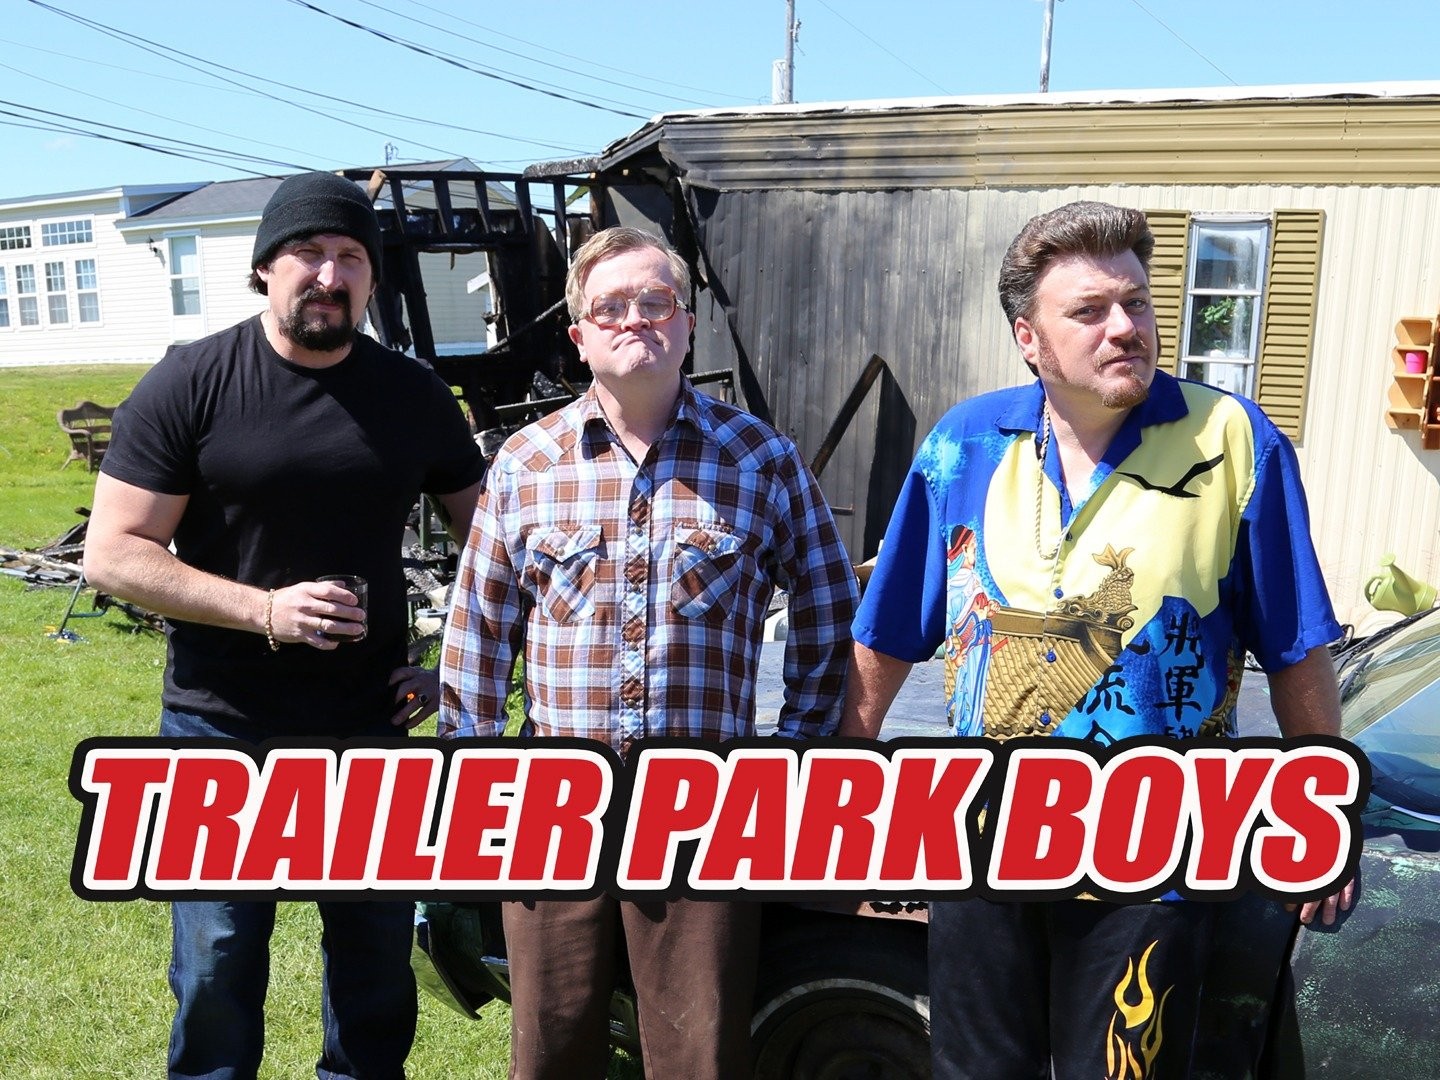 Trailer Park Boys (TV Series 2001–2018) - IMDb